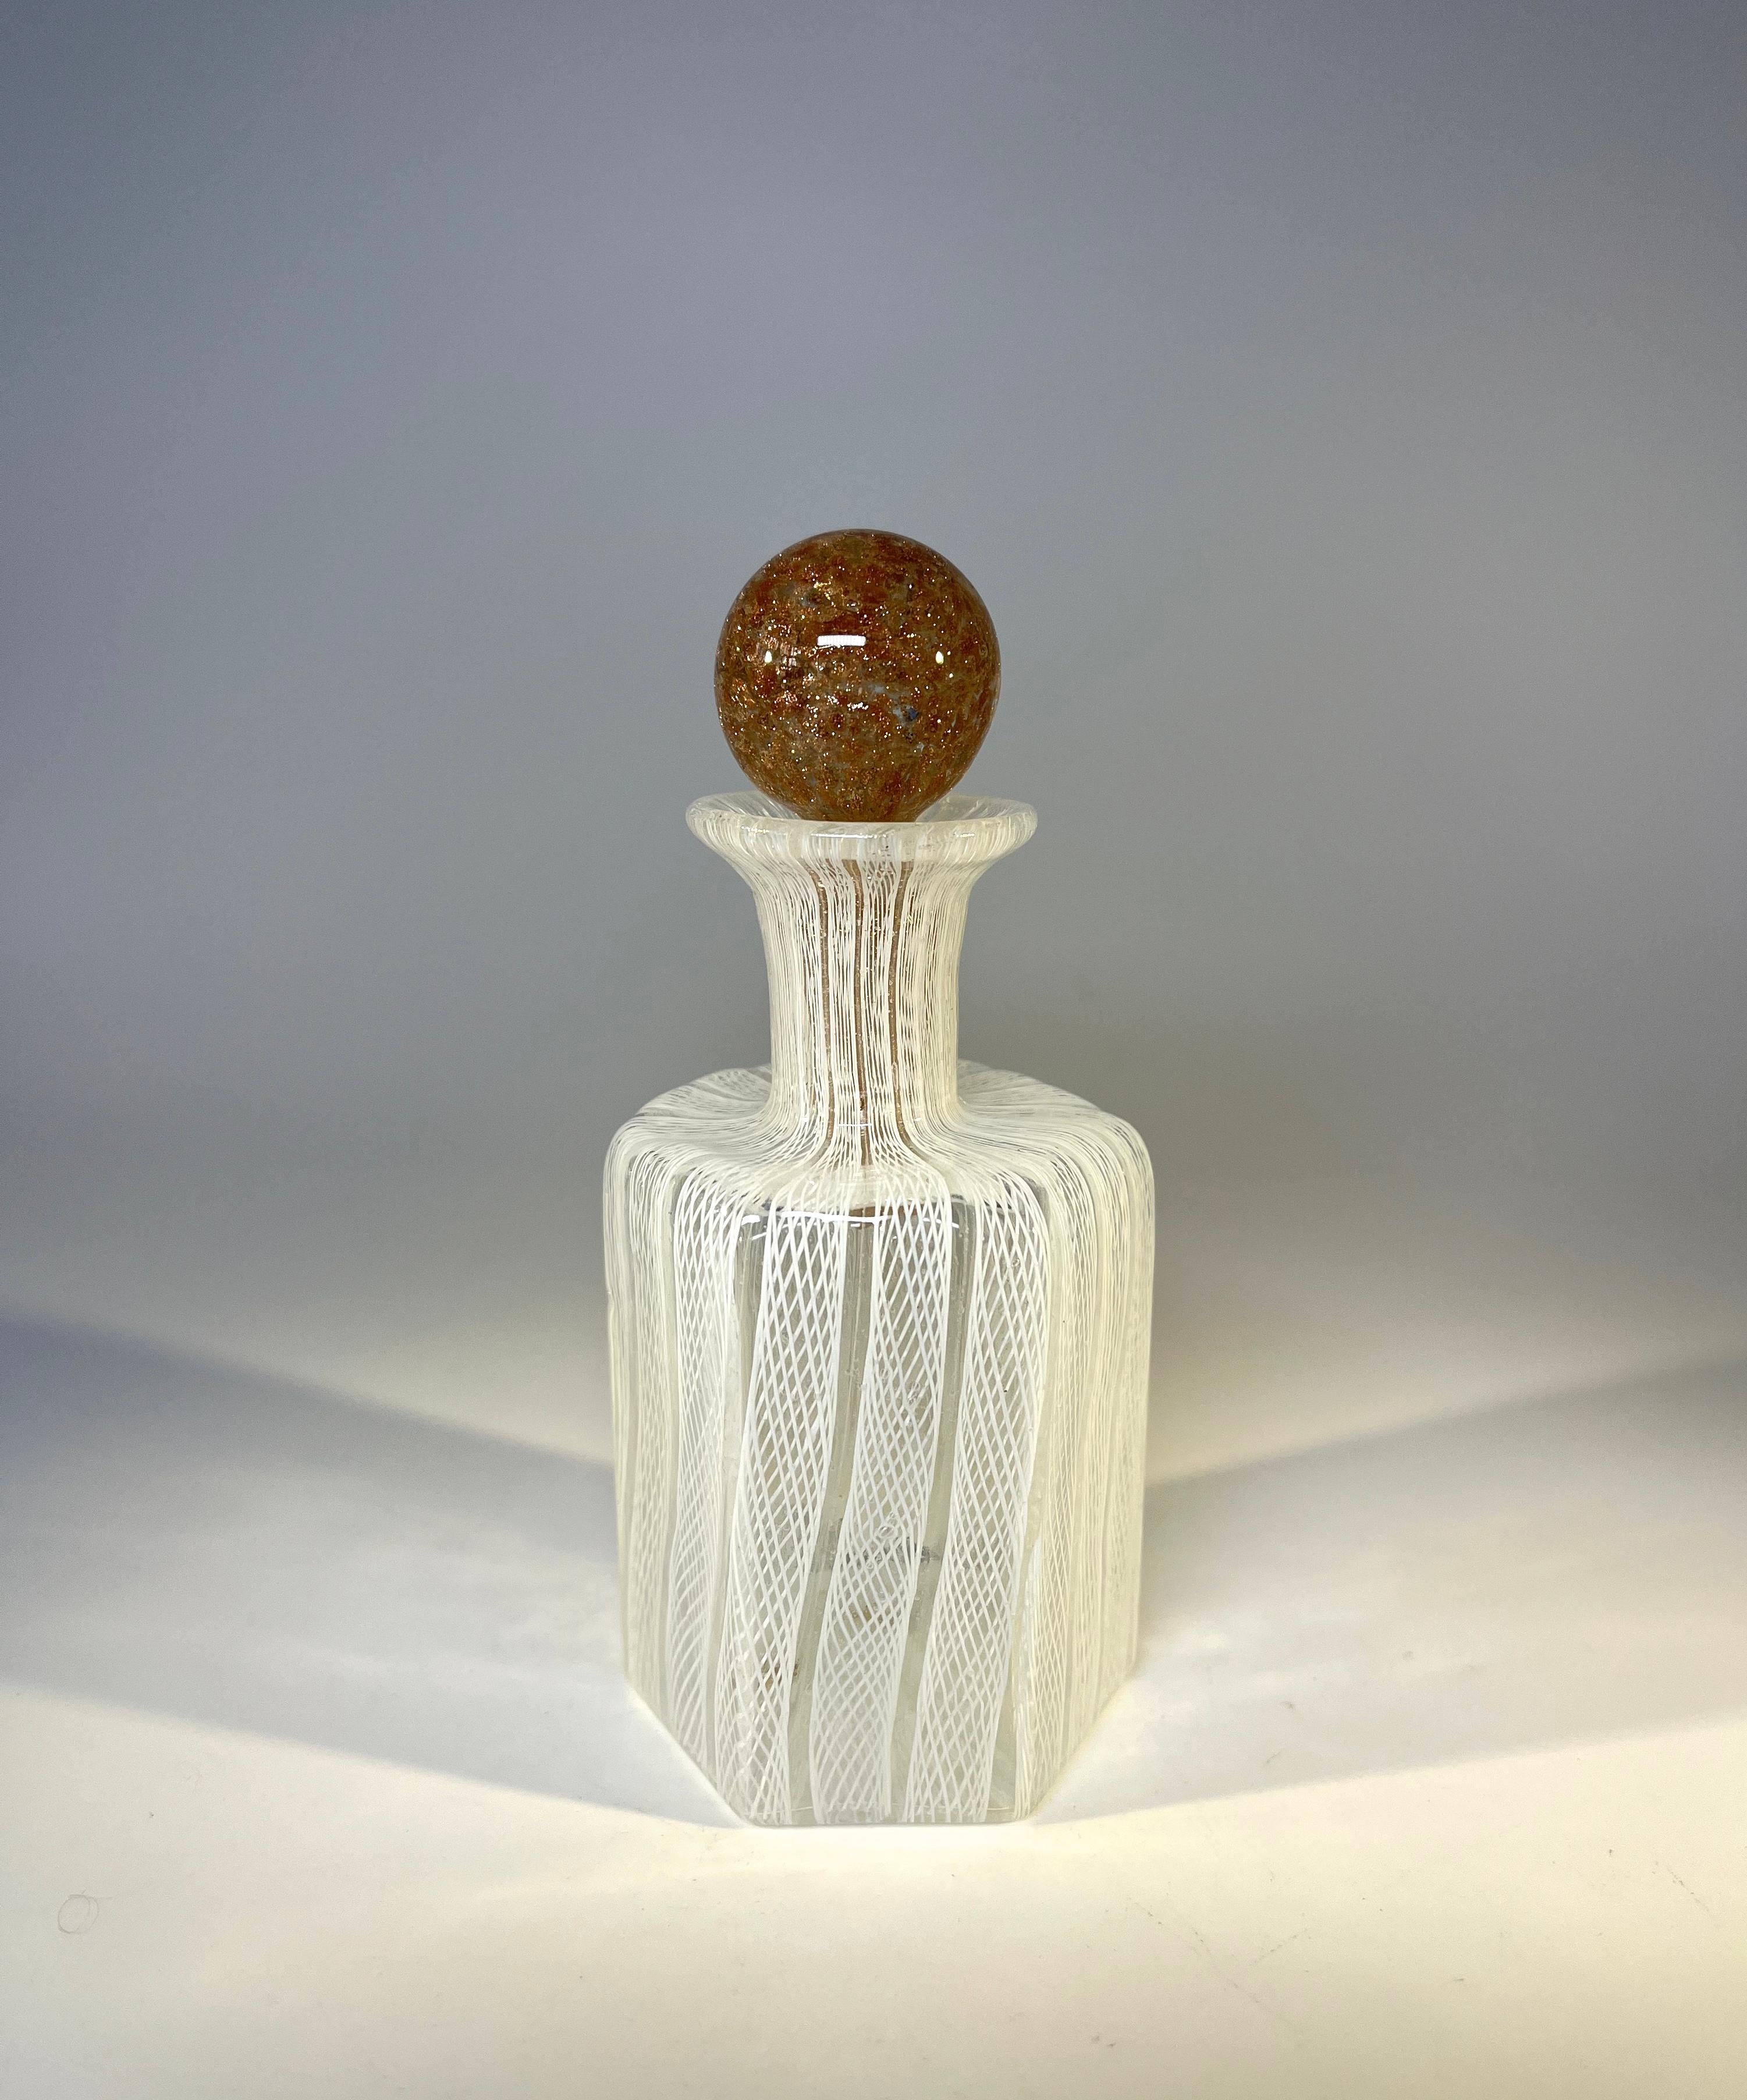 Polished Desirably Shaped Latticino Venetian Glass Perfume Bottle with Aventurine Stopper